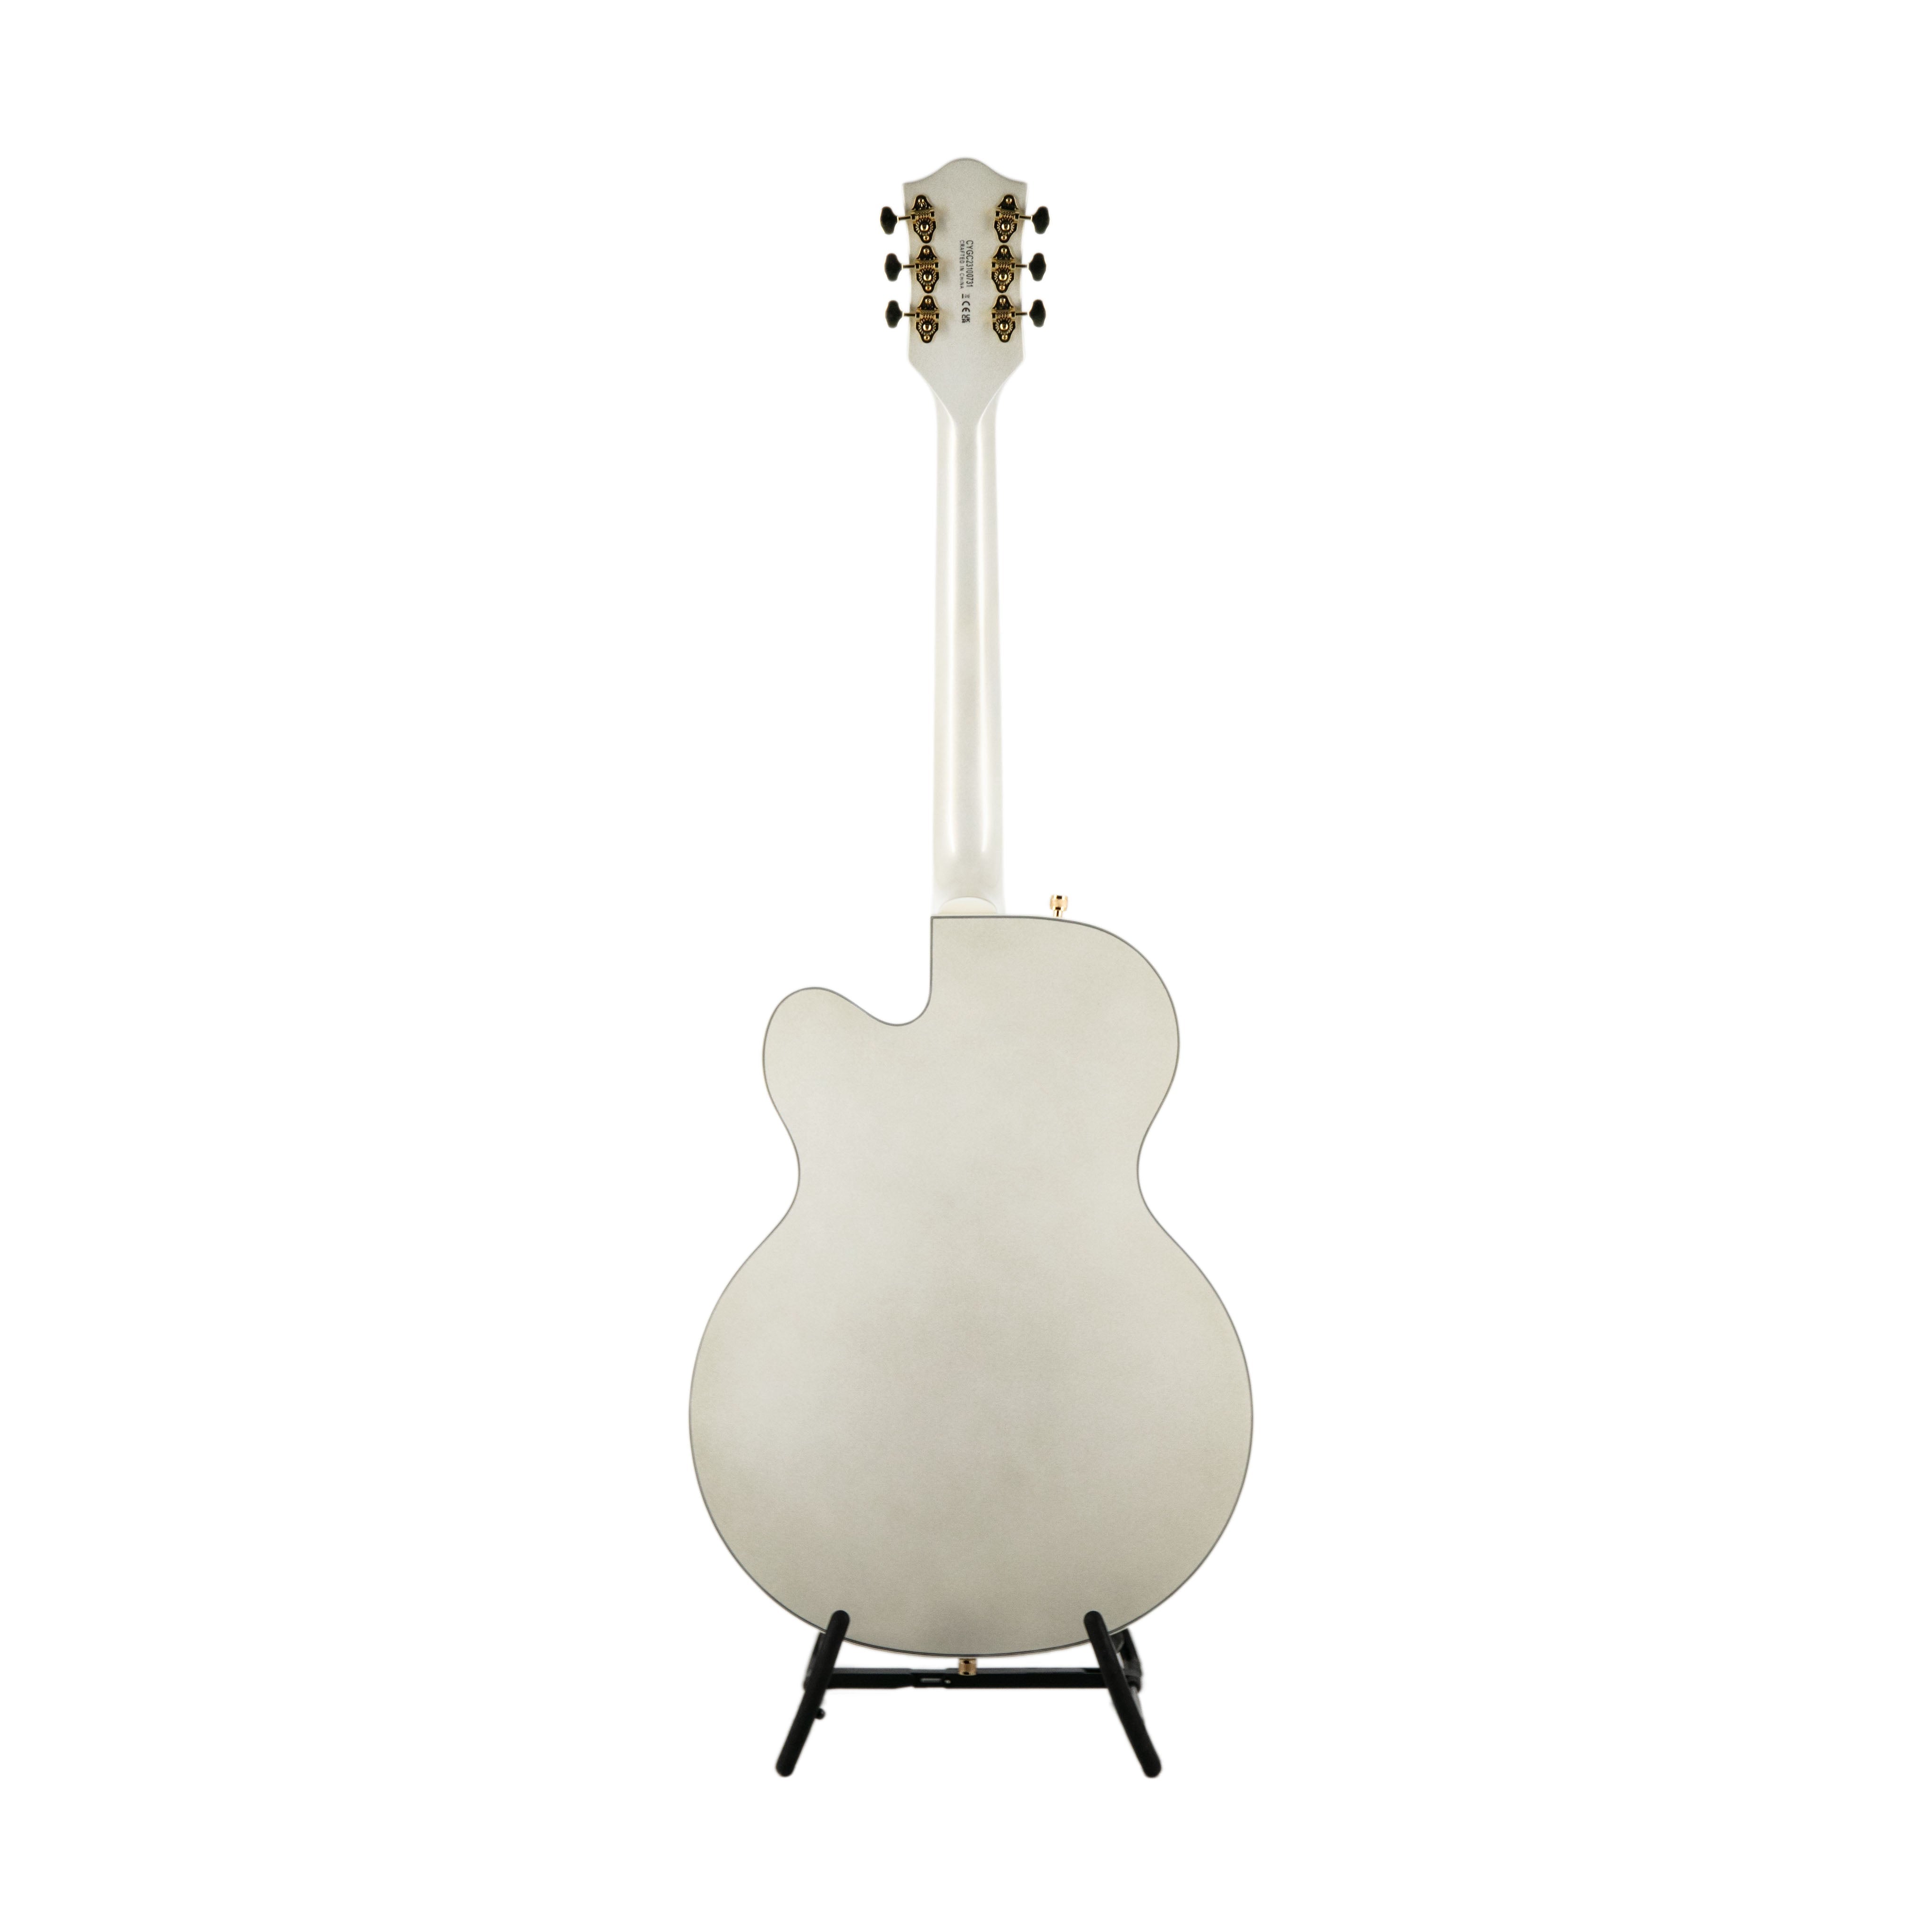 Gretsch FSR G5427TG Electromatic Hollow Body Single-Cut Guitar, Champagne White